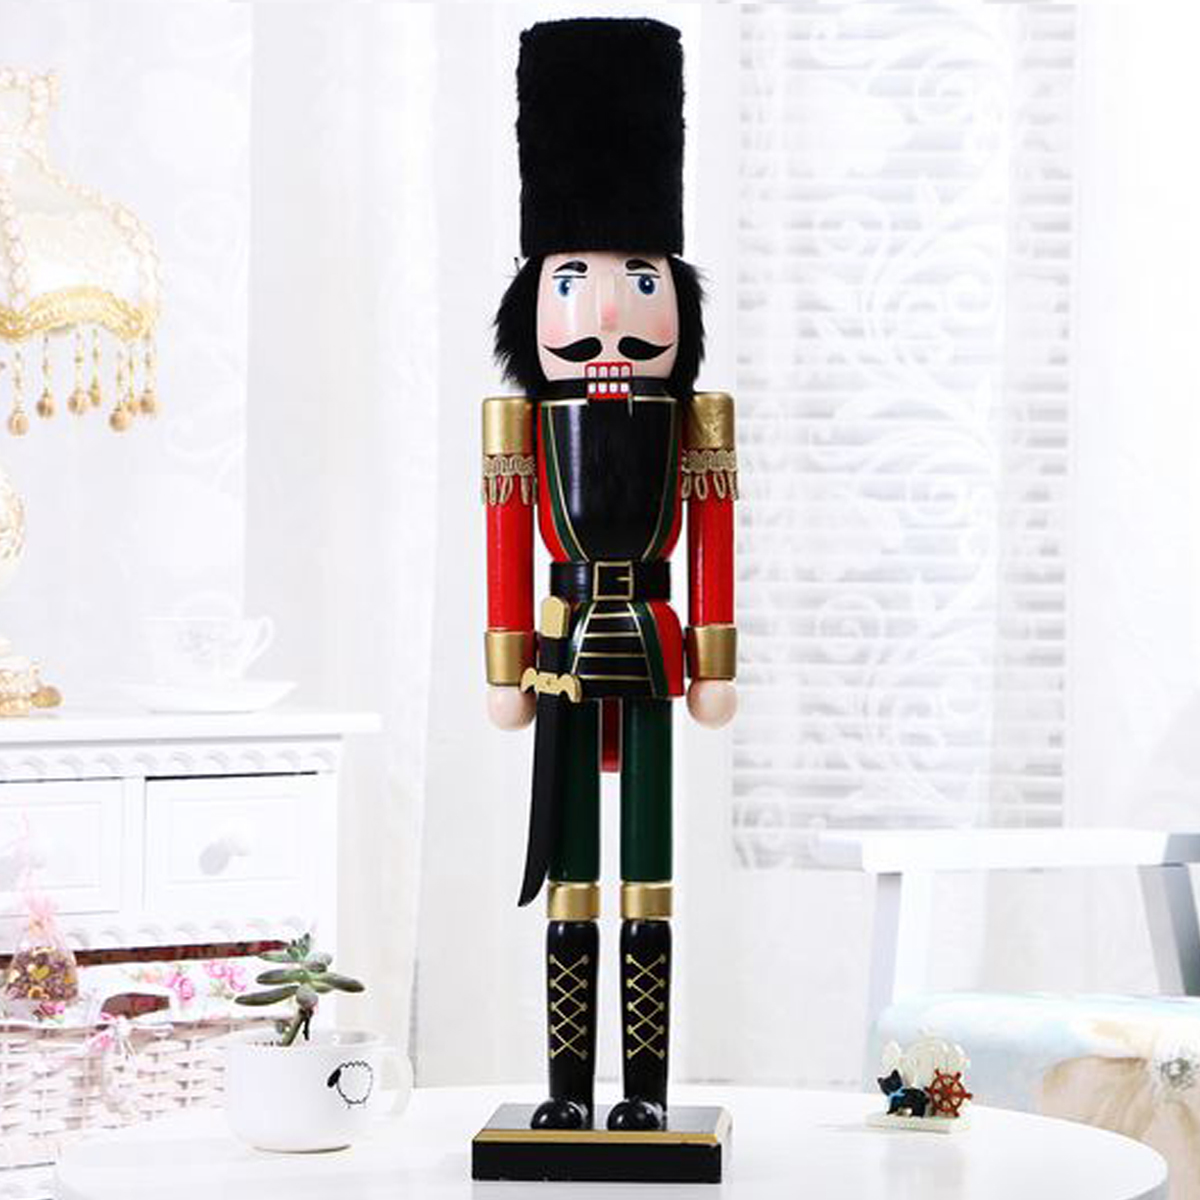 60cm-Nut-Cracker-Soldier-Christmas-Decoration-Nutcrackers-Xmas-Kitchen-Wooden-Doll-1399398-8